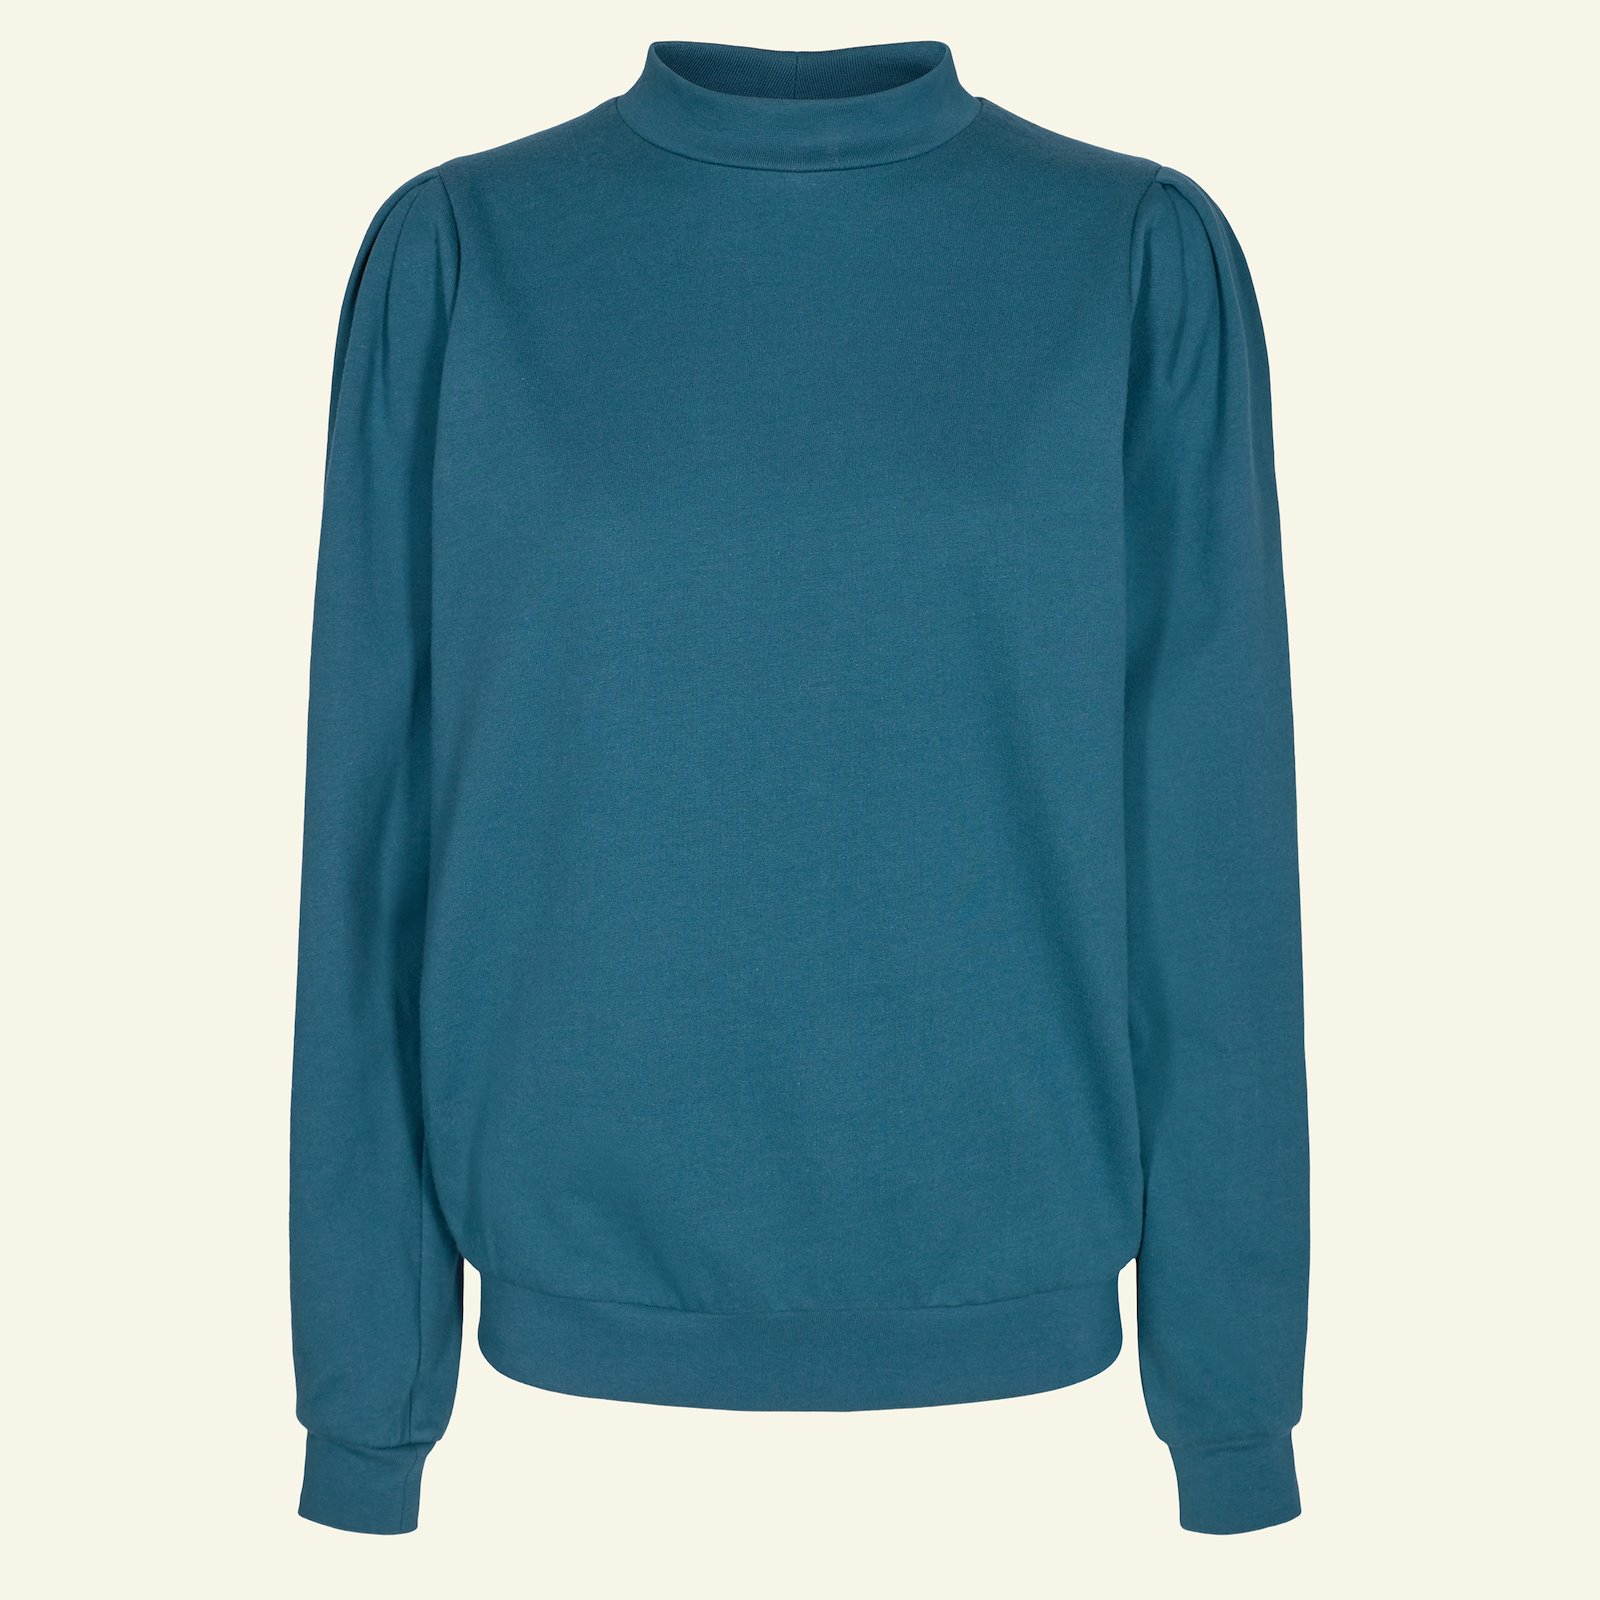 Sweatshirt with puff sleeves, L p22074_211775_230657_sskit